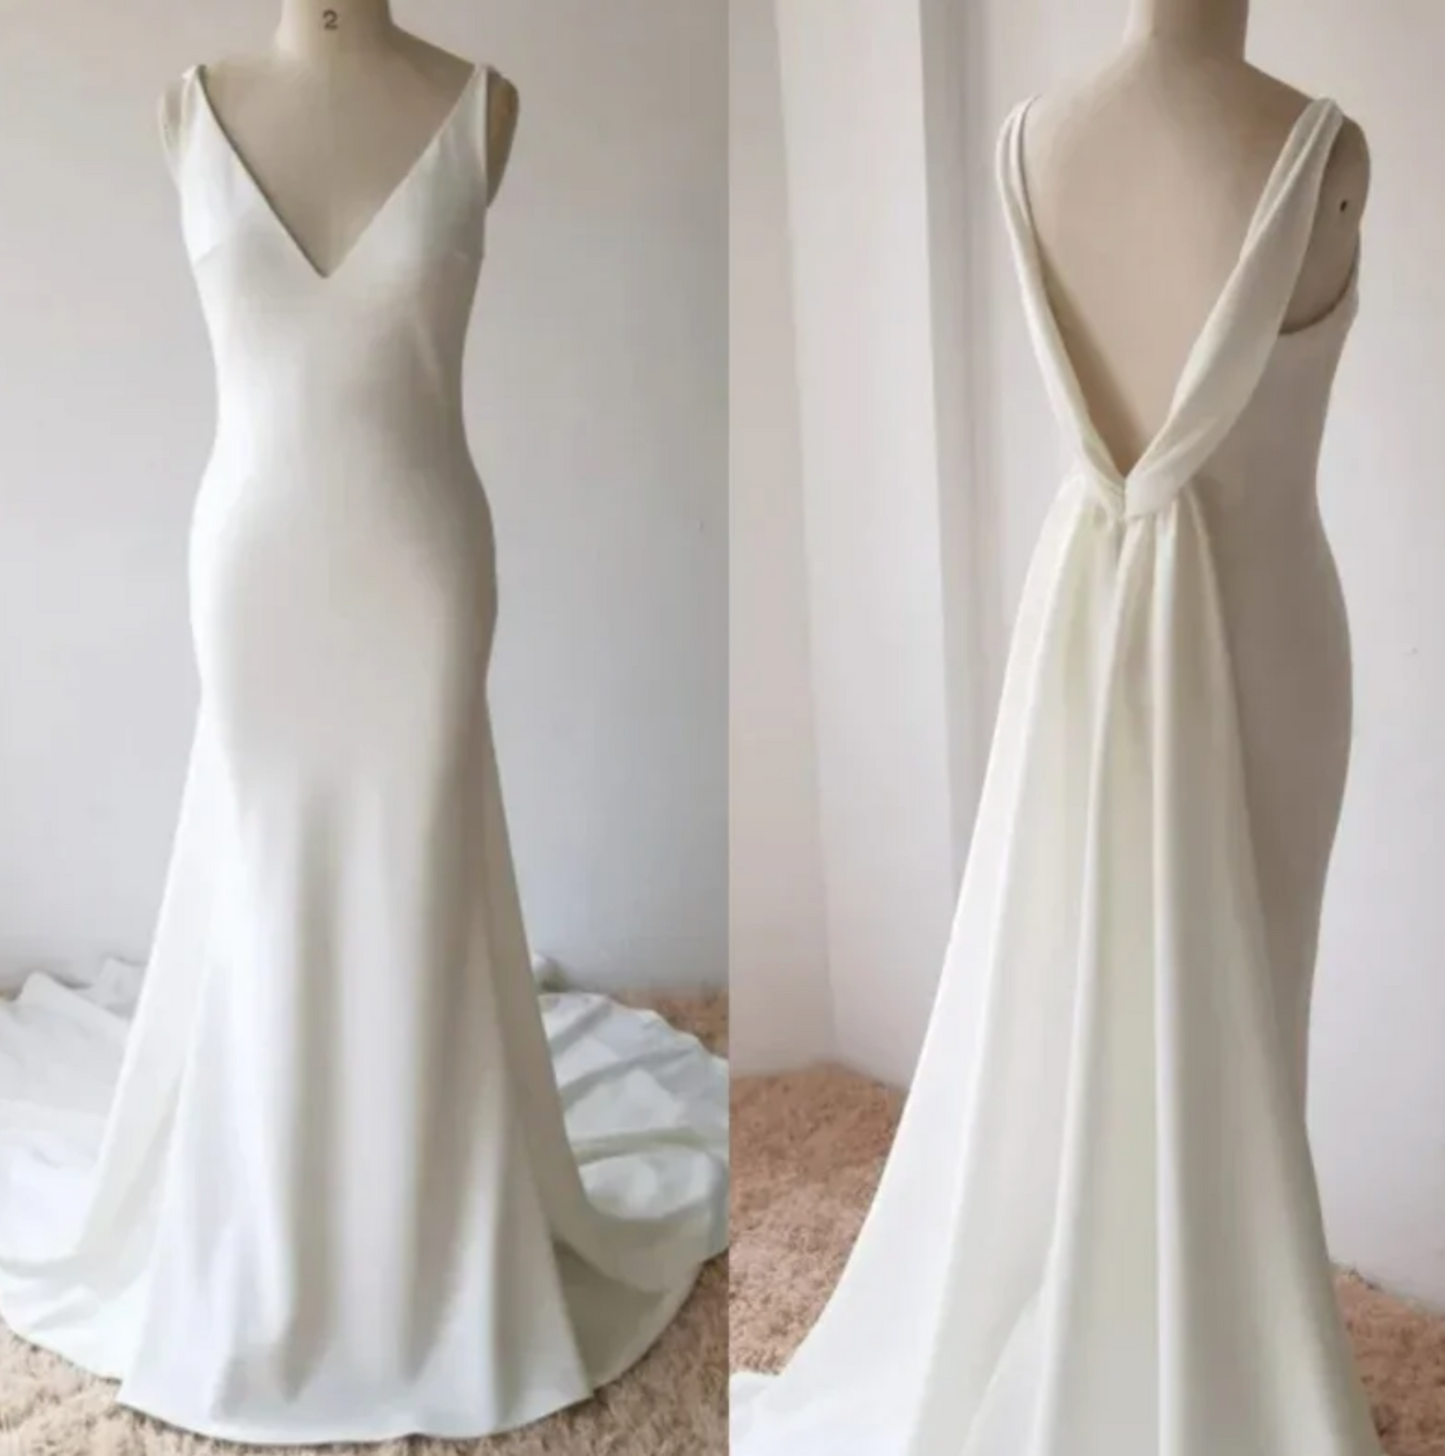 Deep V Neck Crepe Detachable Train Mermaid Wedding Dress Open Back Bridal Gown